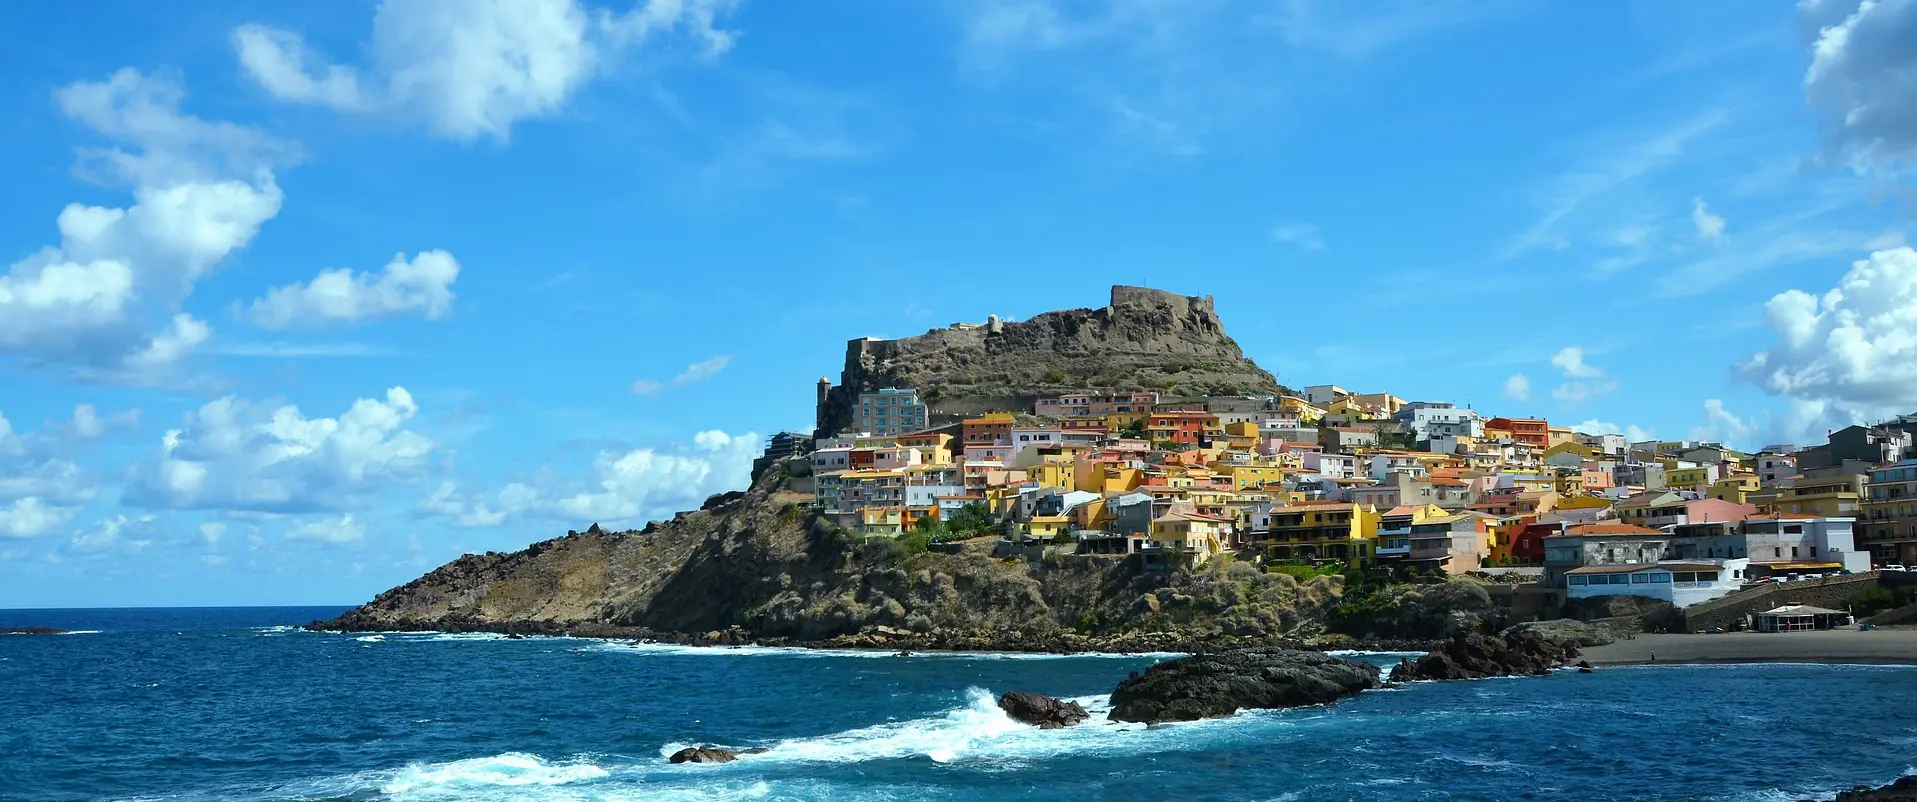 Round trip Sardinia: Emerald island in the Mediterranean